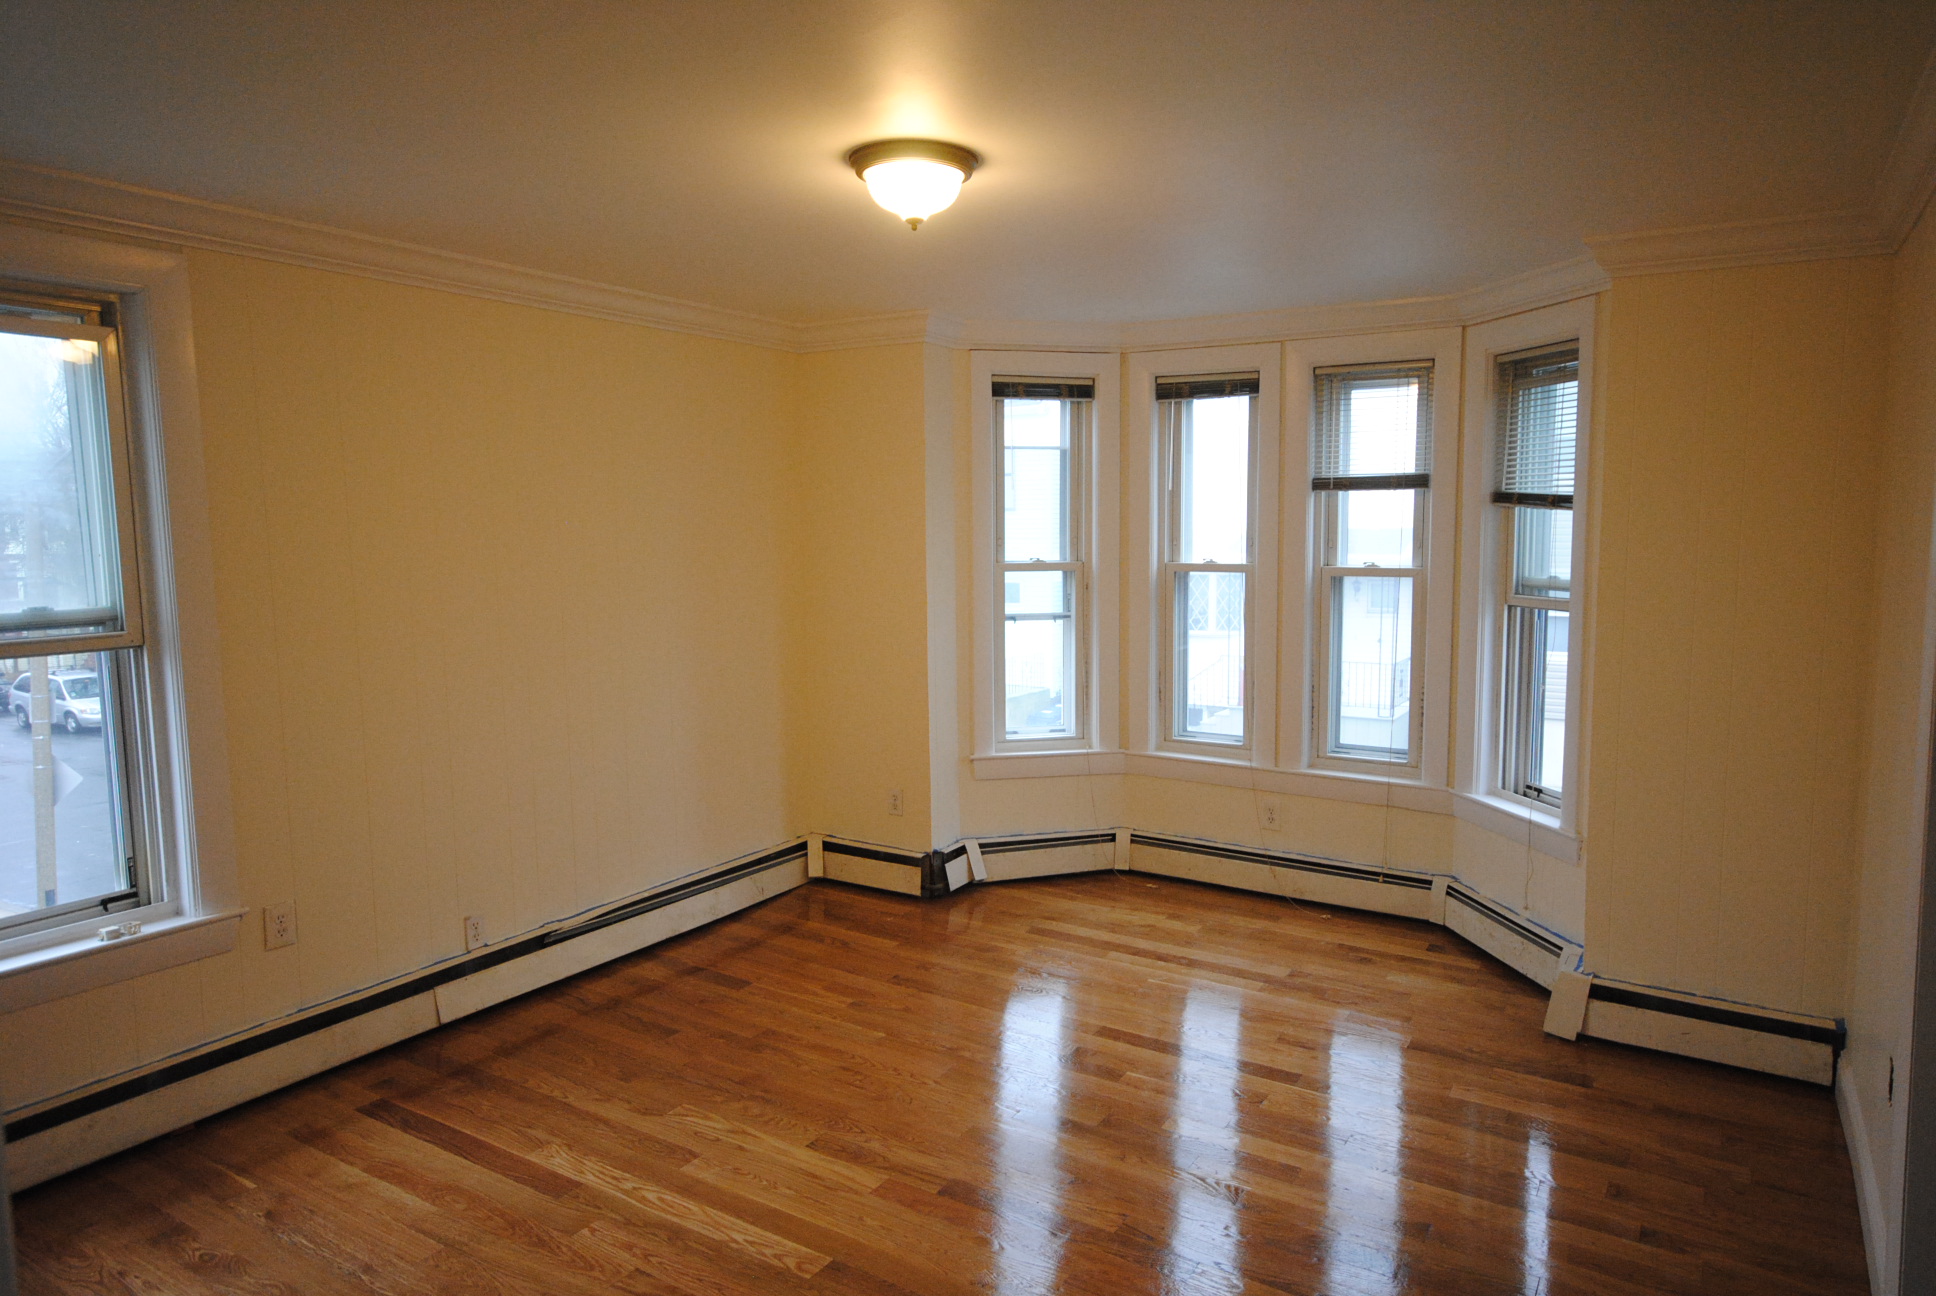 Photos of apartment on Wordsworth,Boston MA 02128